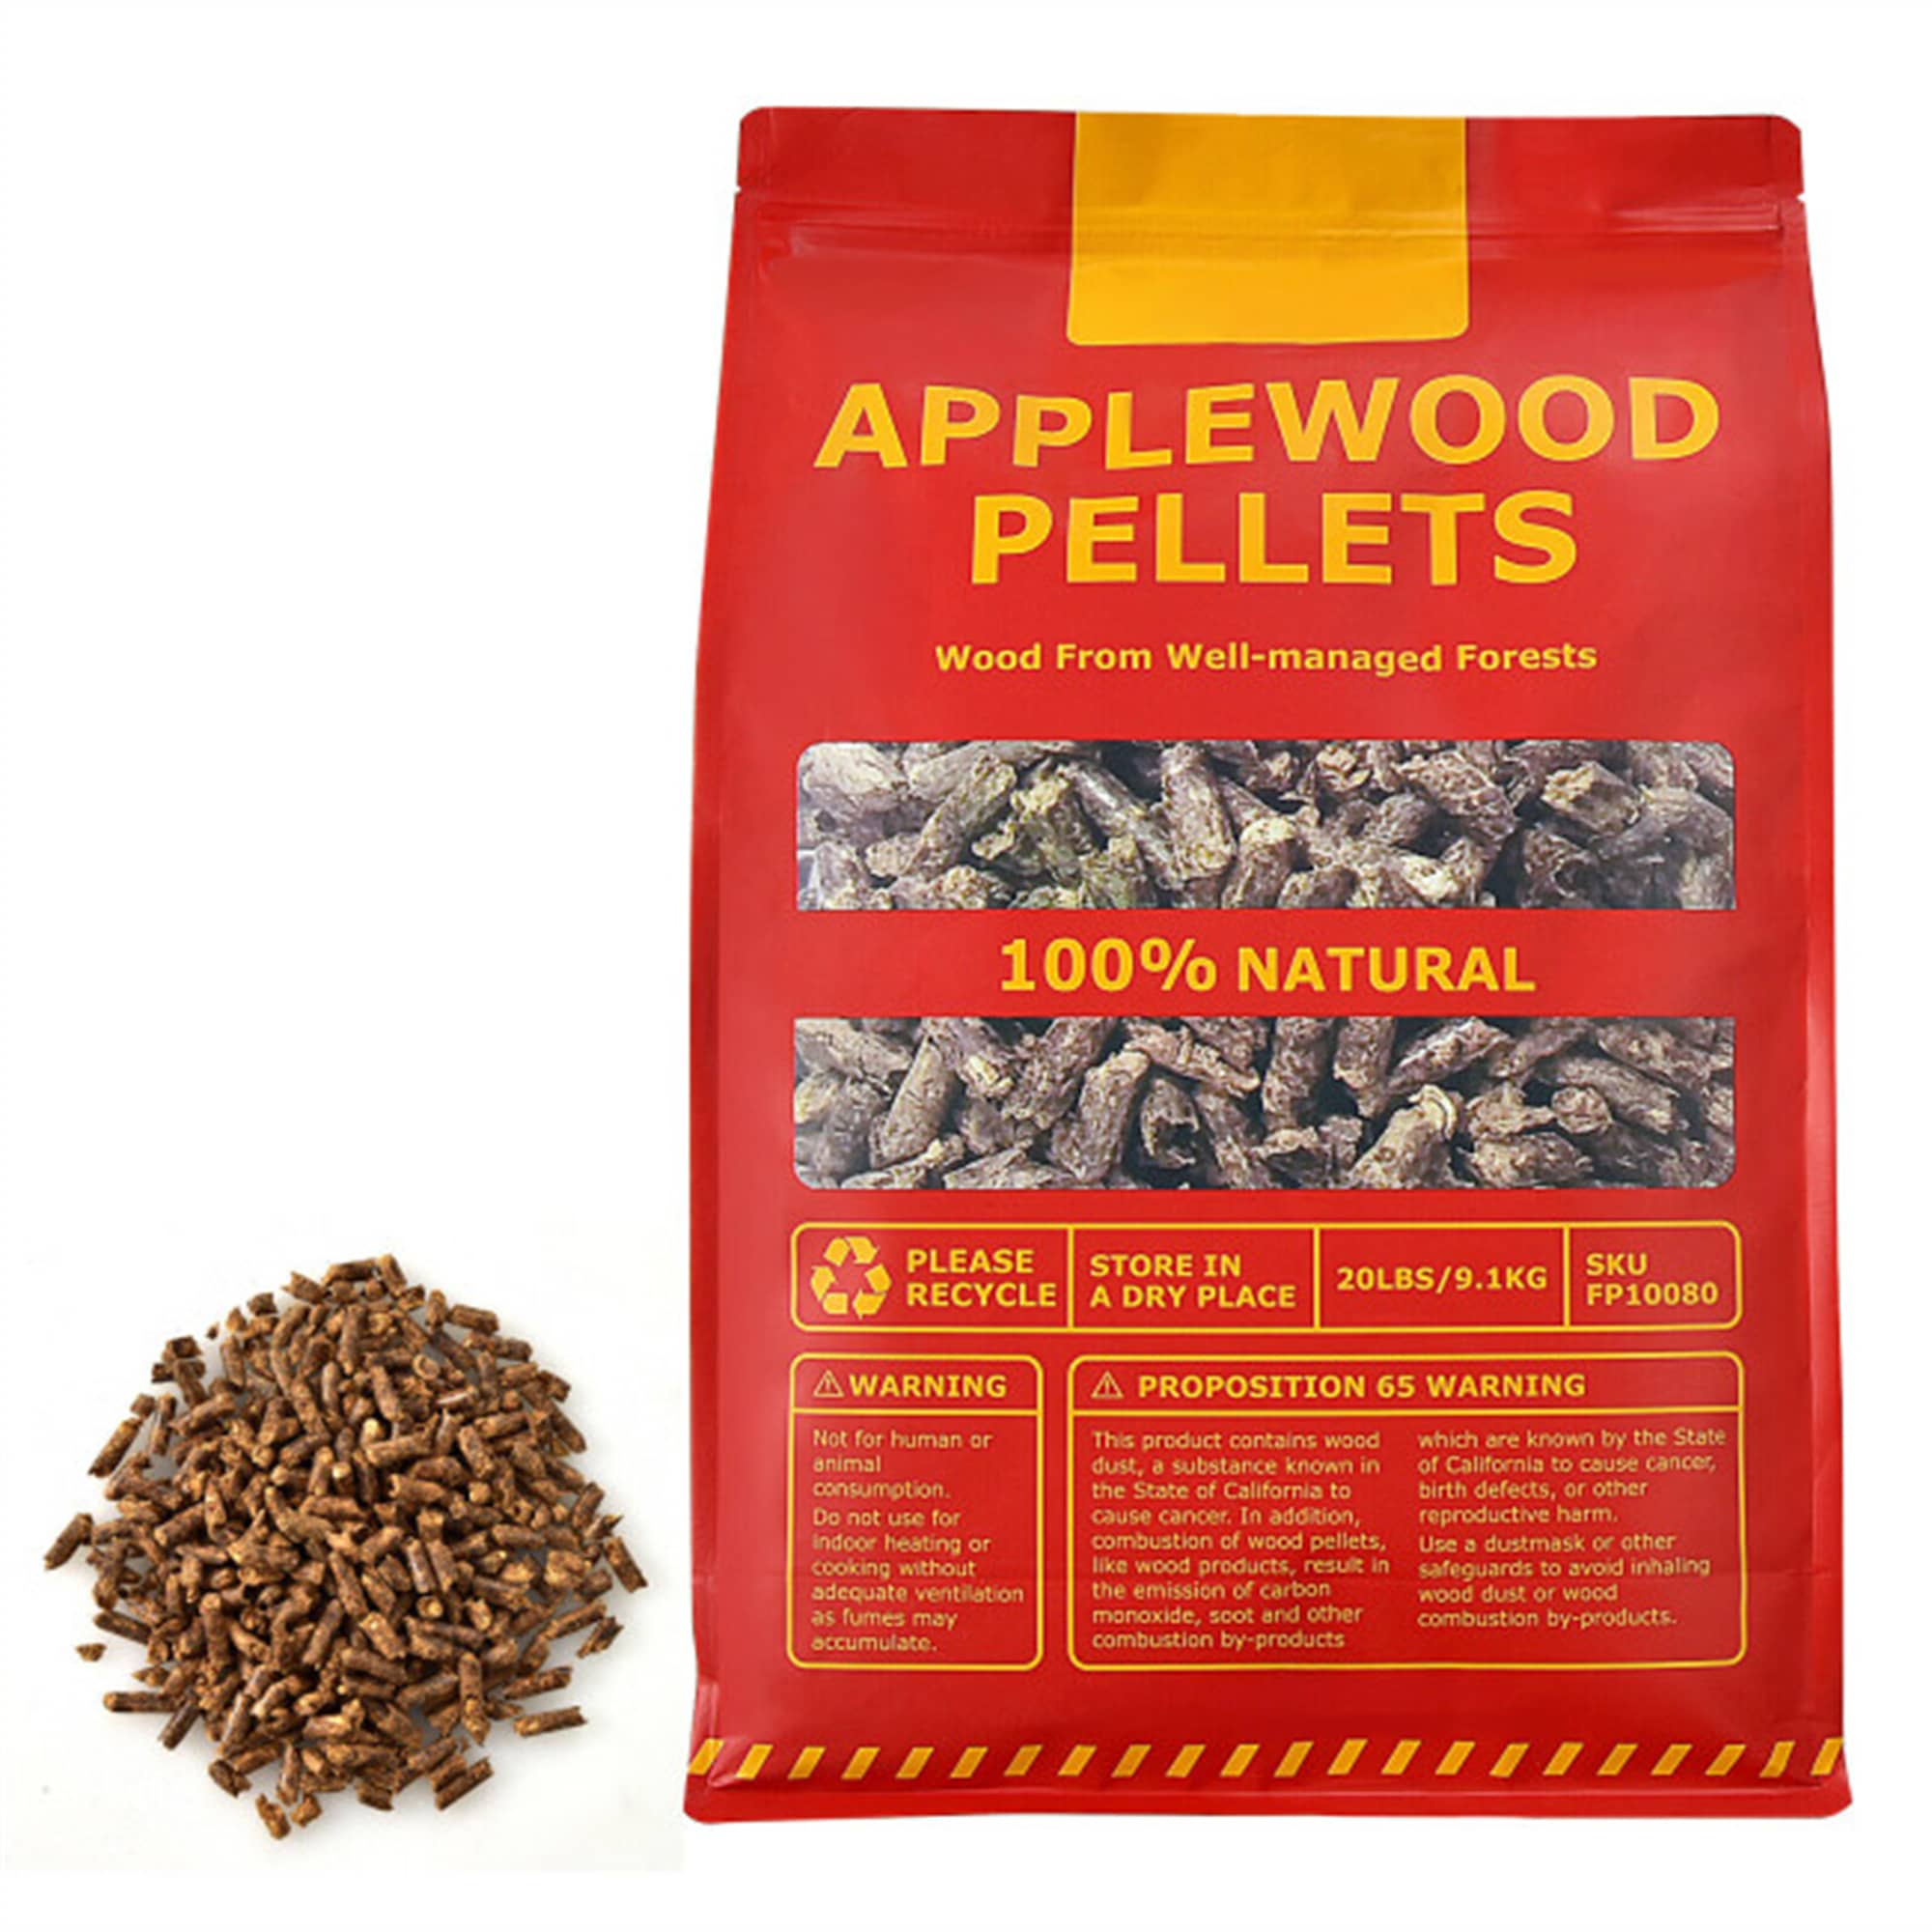 CASAINC 20 Pounds Apple Wood Pellets 100% All-Natural for Pellet Grills